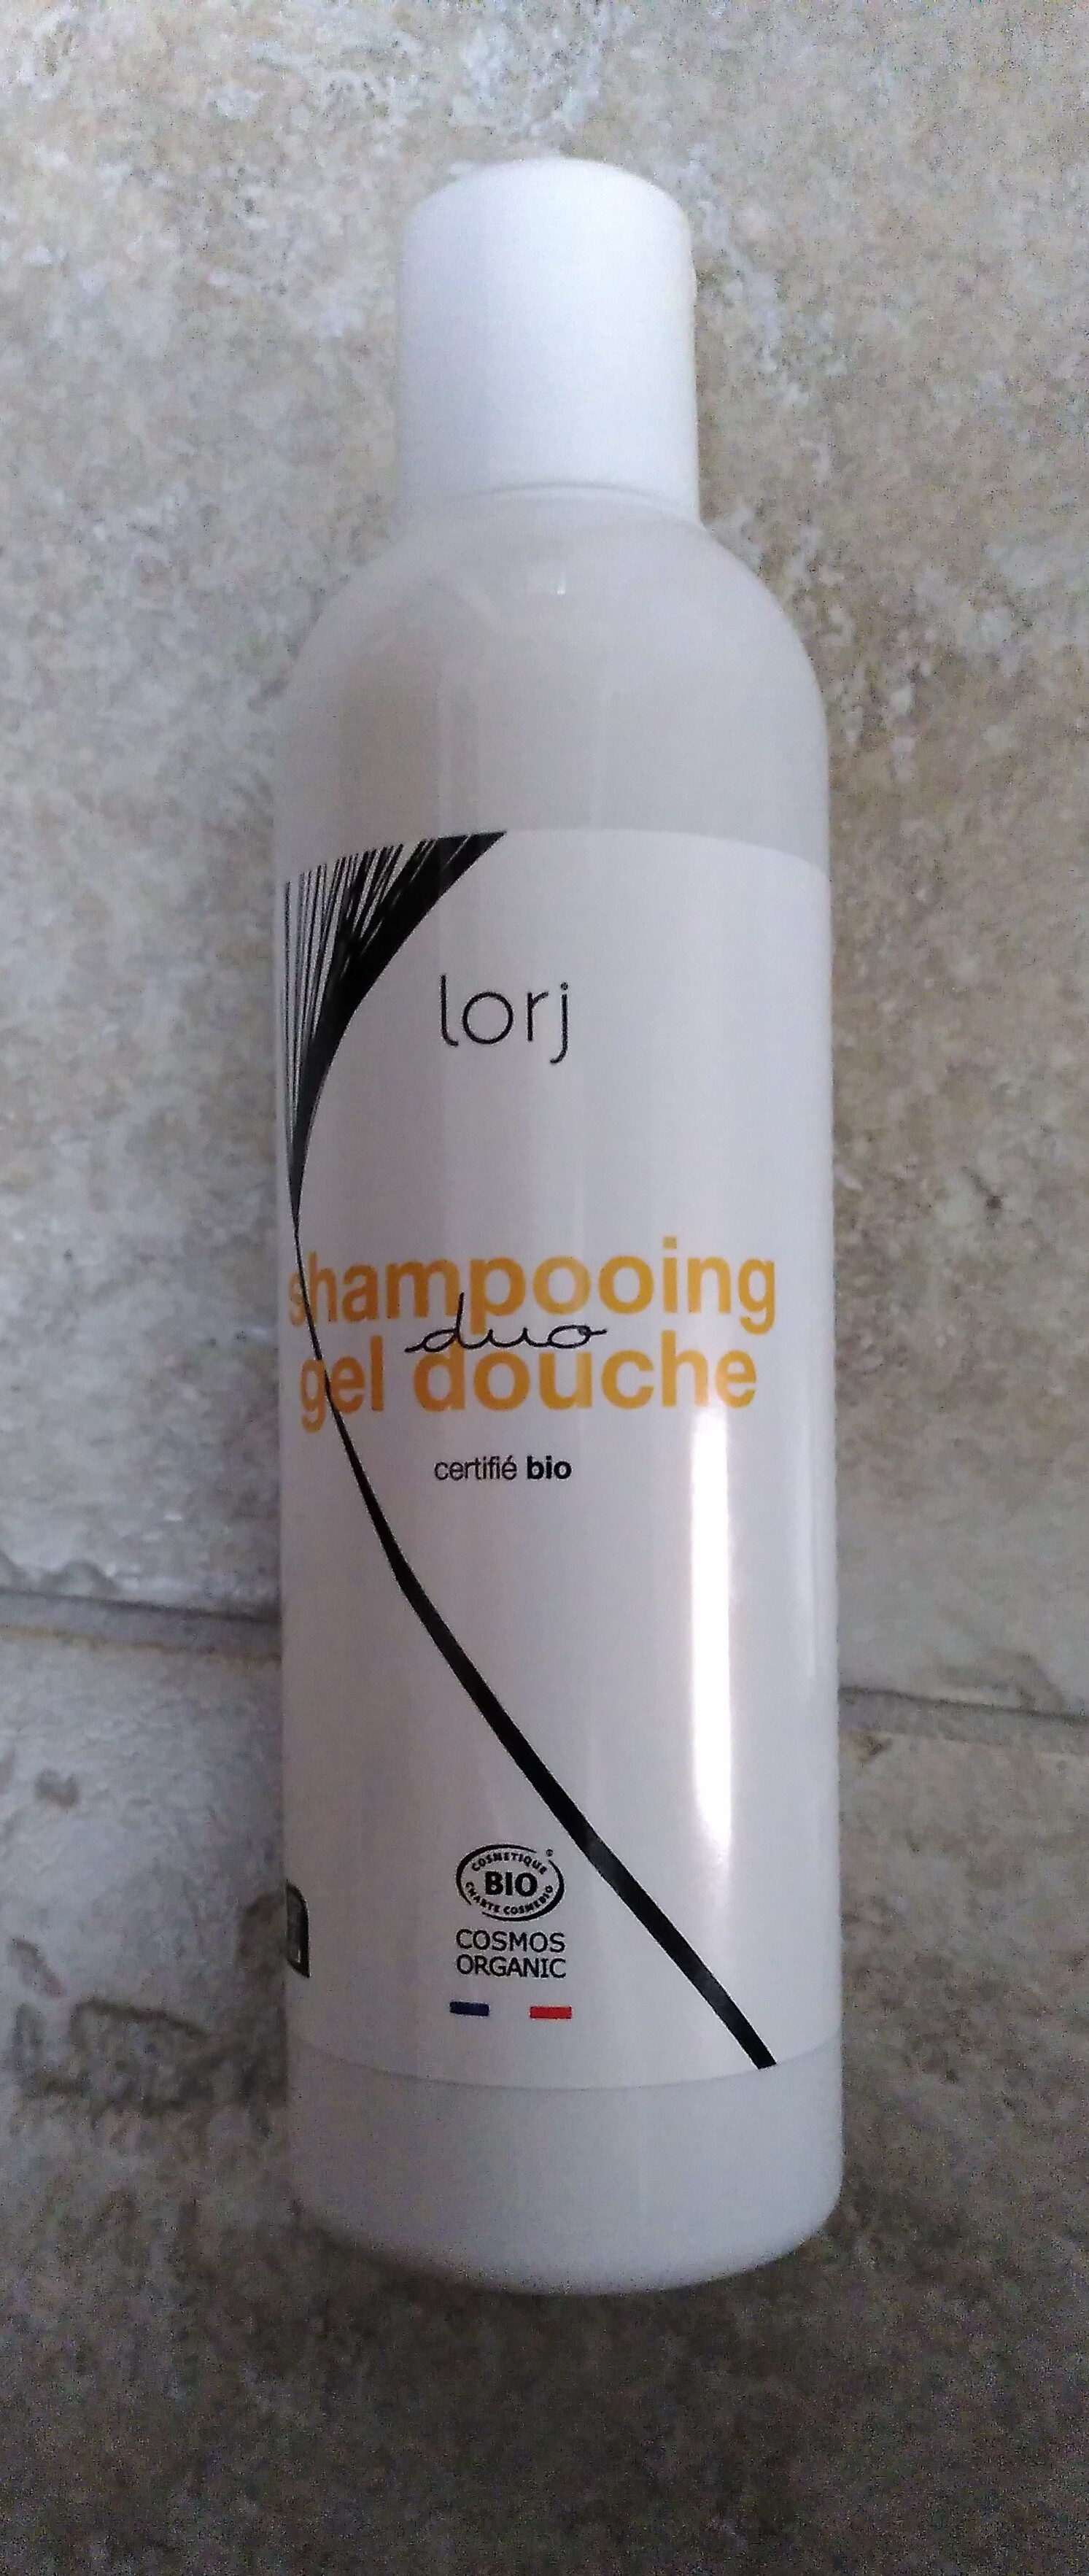 Duo shampoing gel douche - Produit - fr